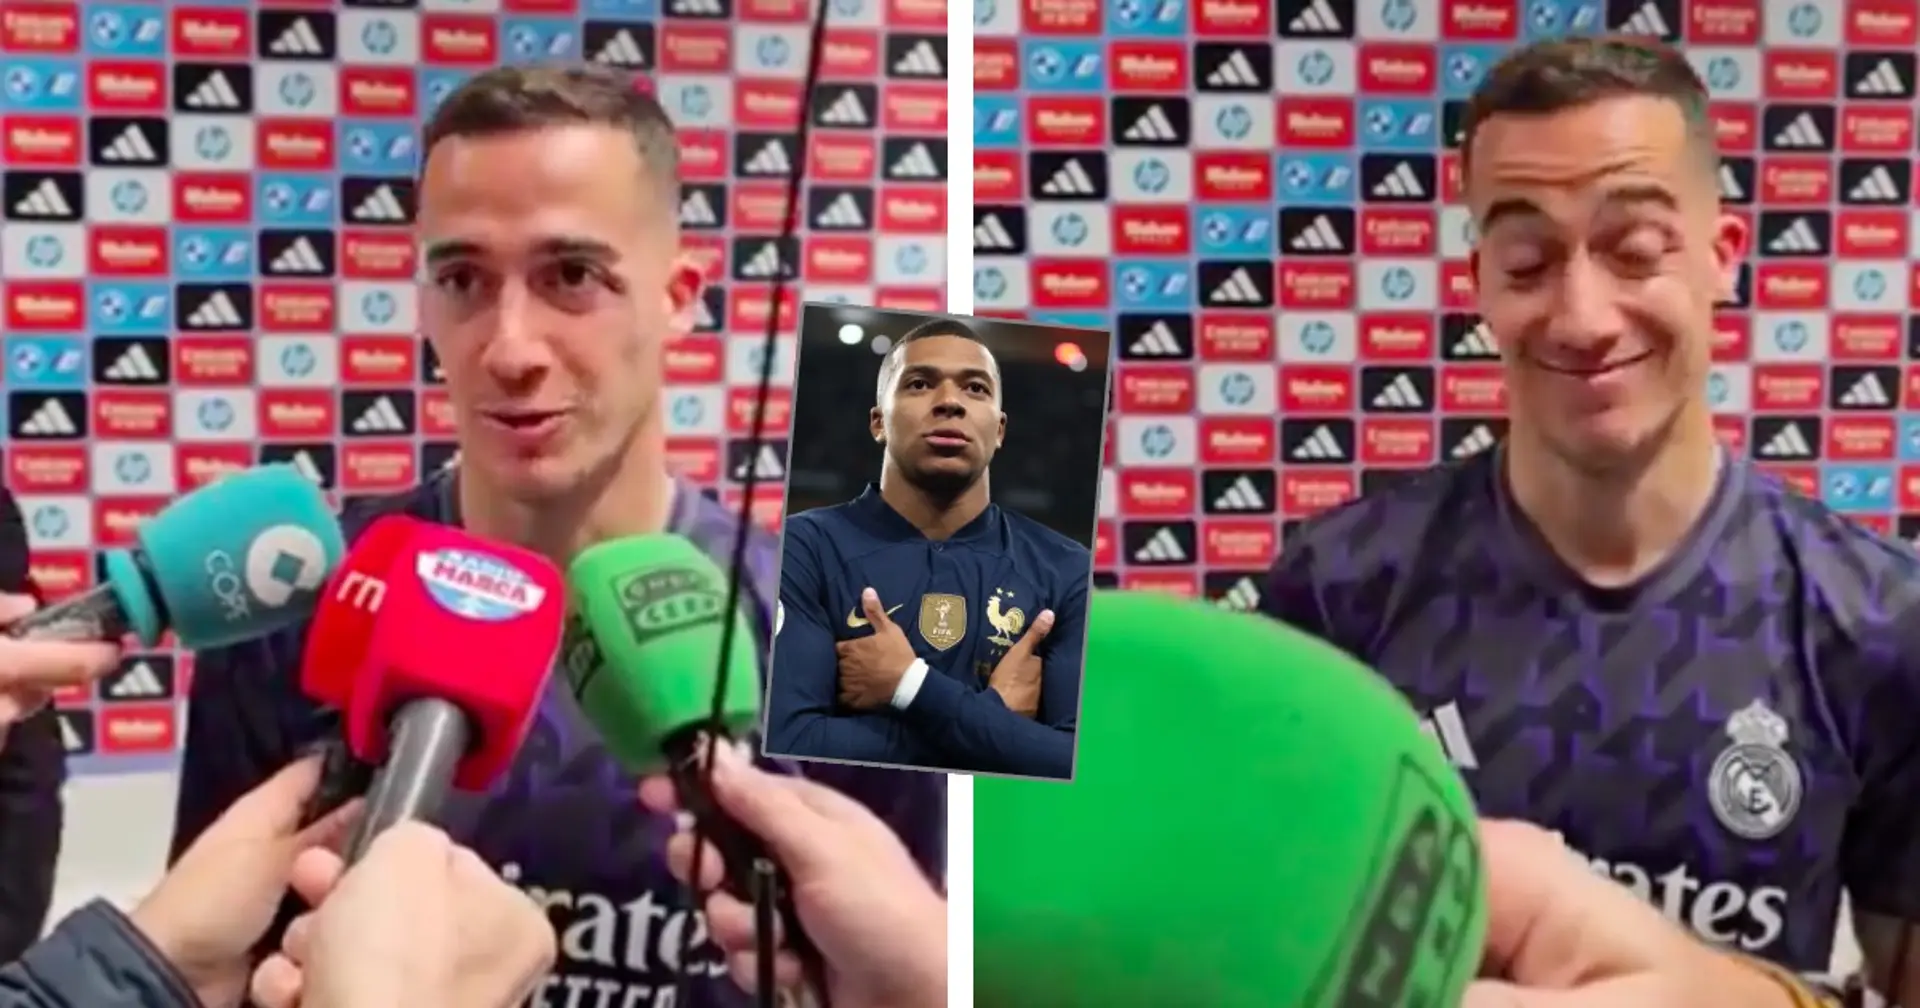 'Escuchamos mucho': la divertida reacción de Lucas cuando le preguntaron por Mbappé